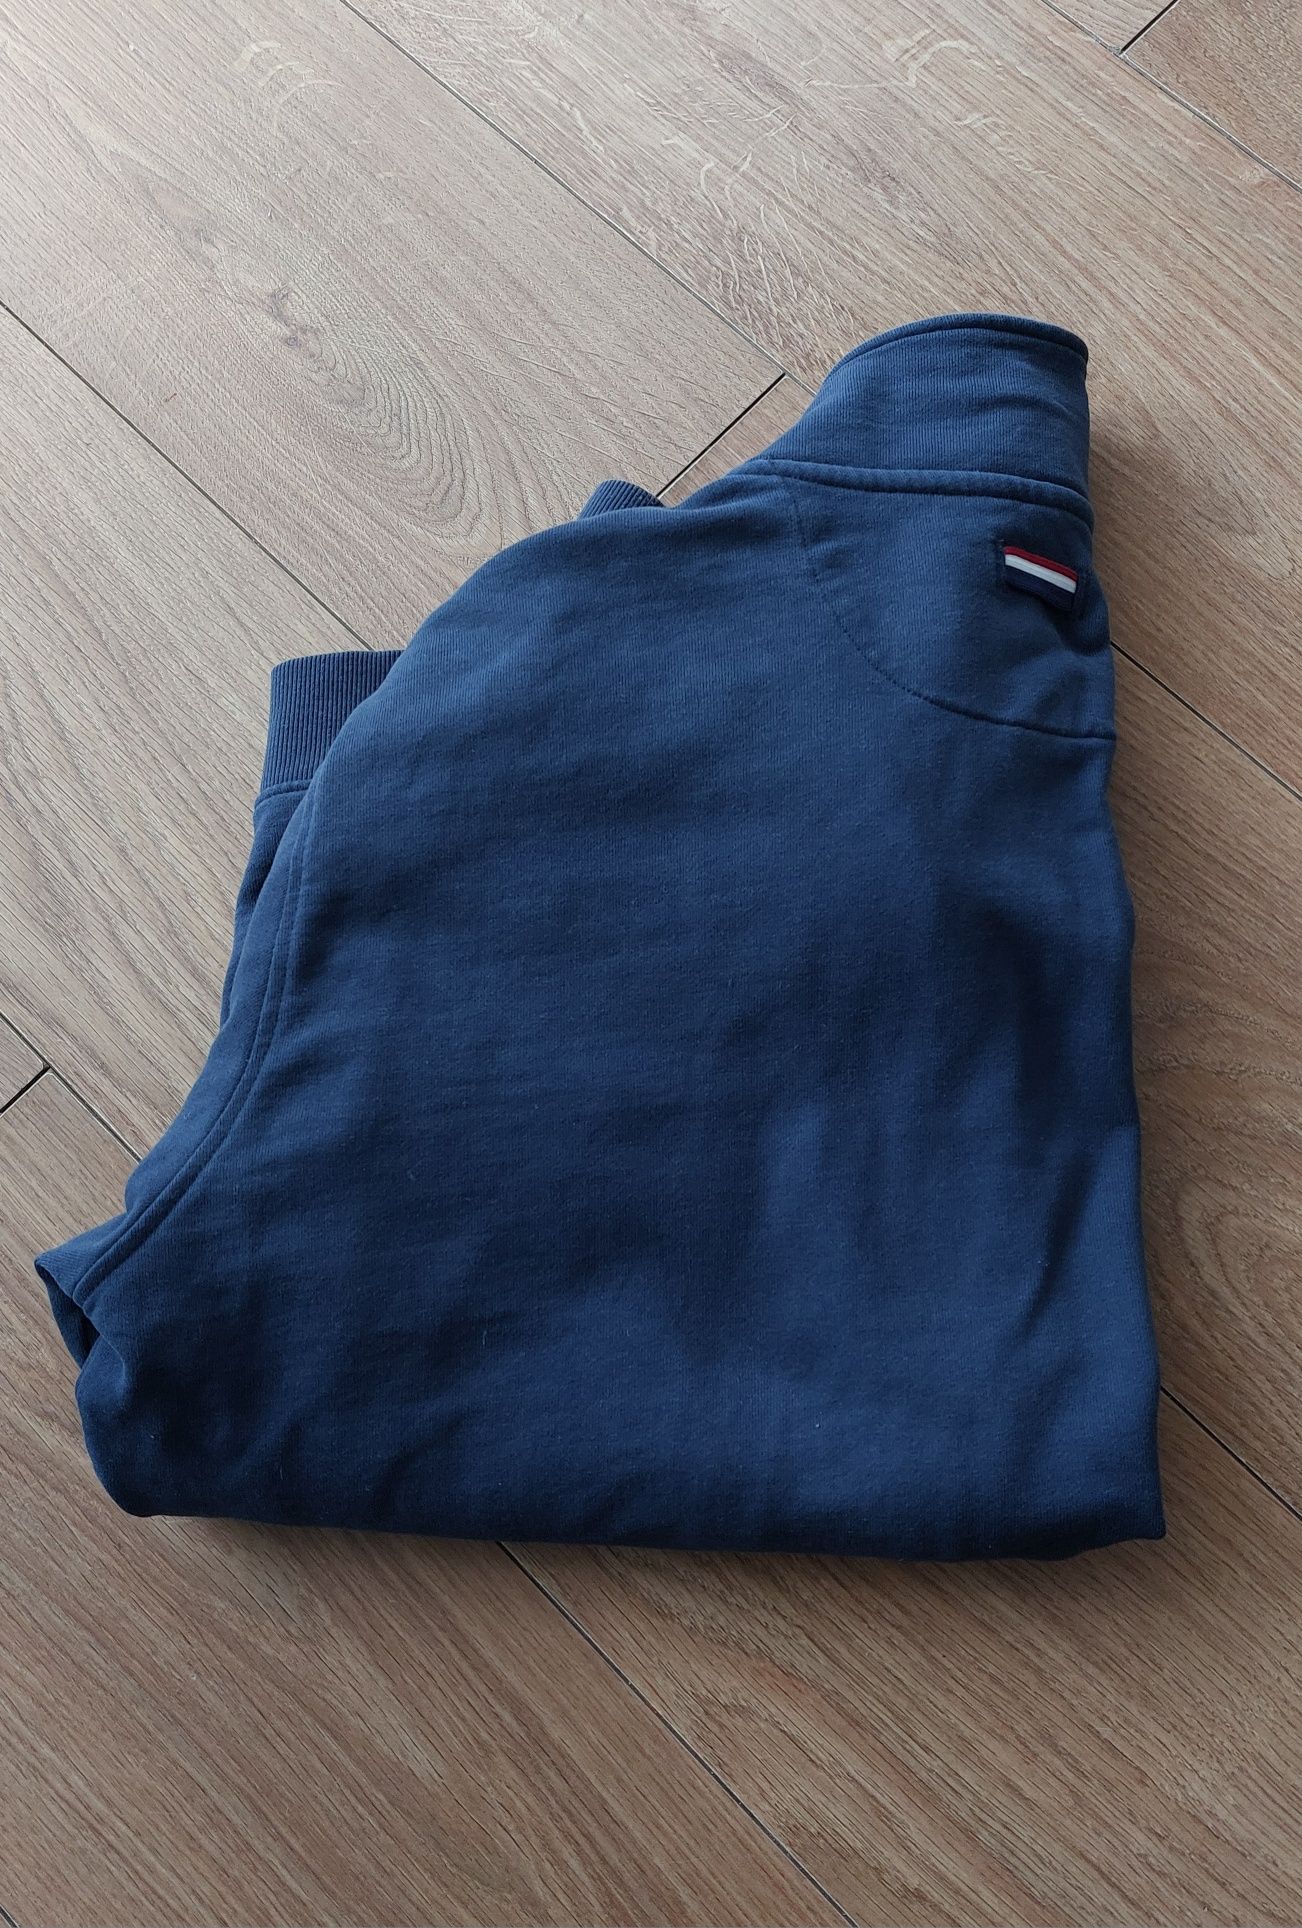 Bluza męska granatowa XL U.S Polo